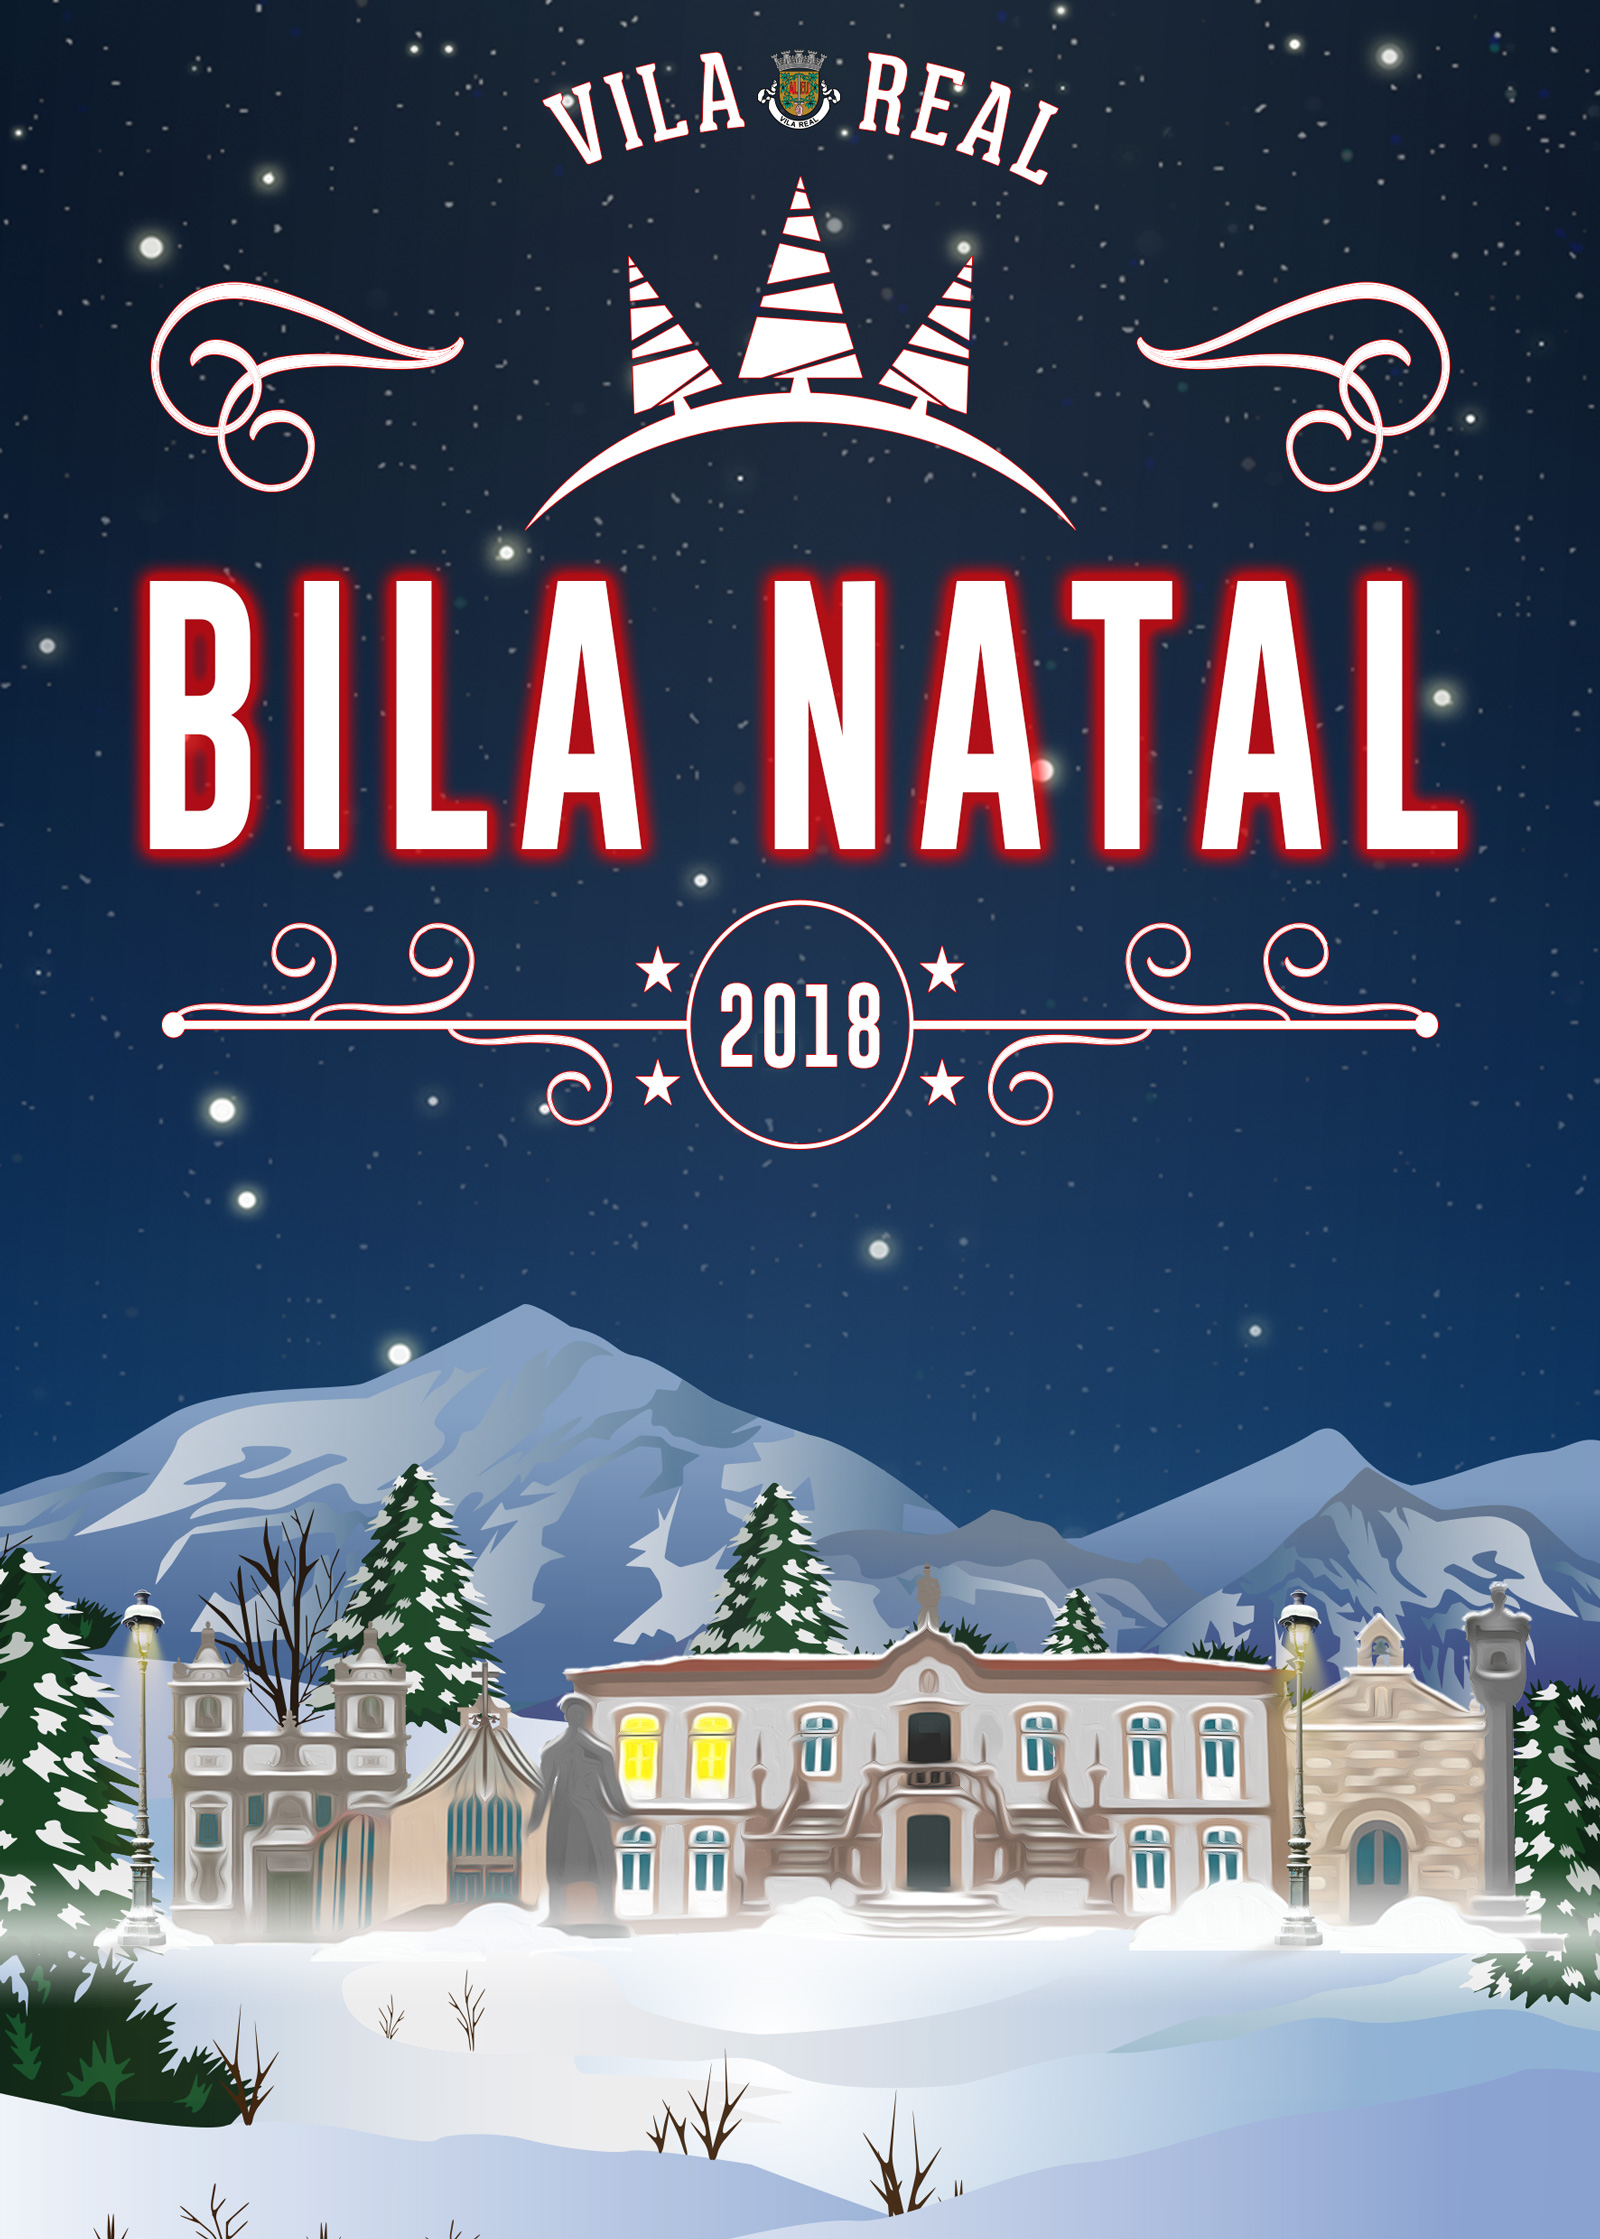 Copy of BILA NATAL 2018